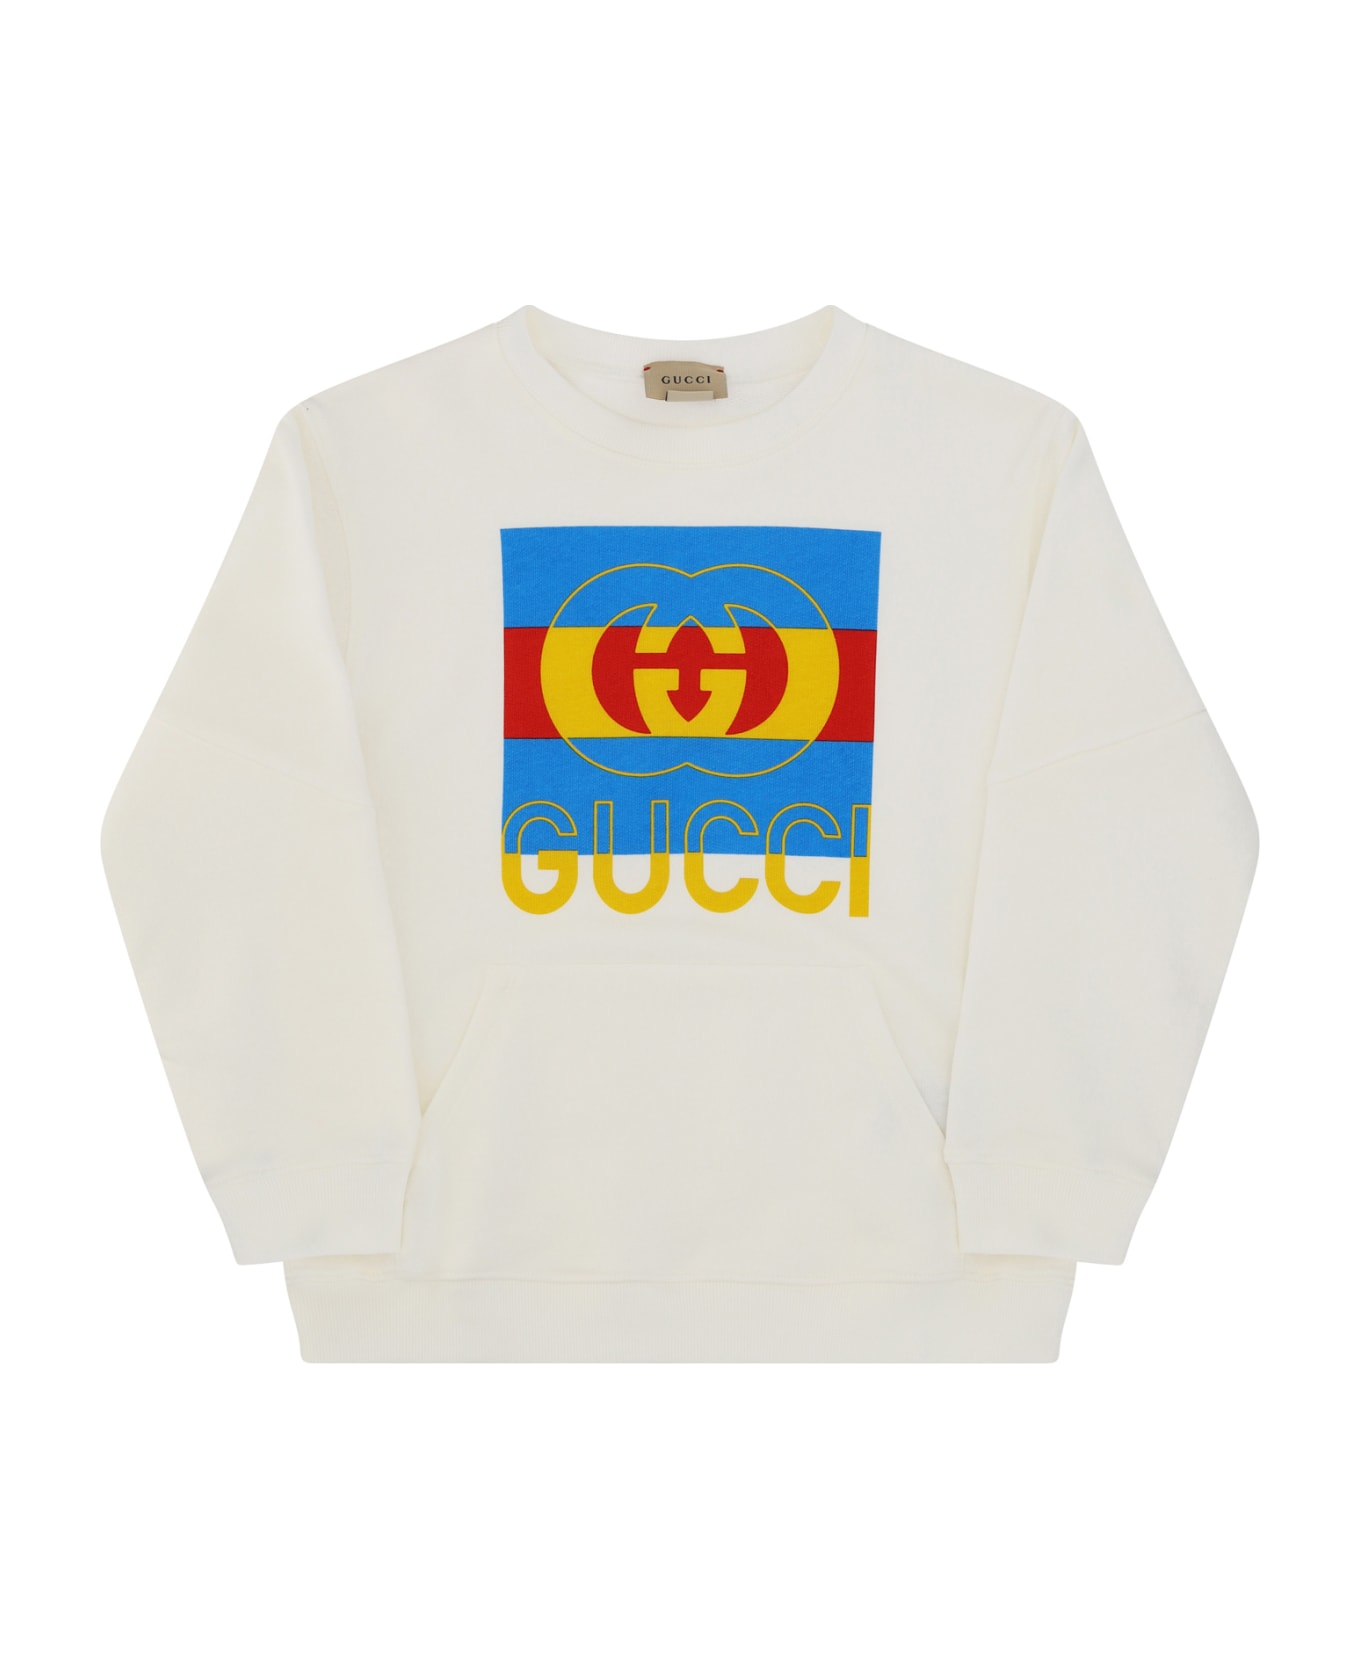 Gucci Sweatshirt For Boy - New White